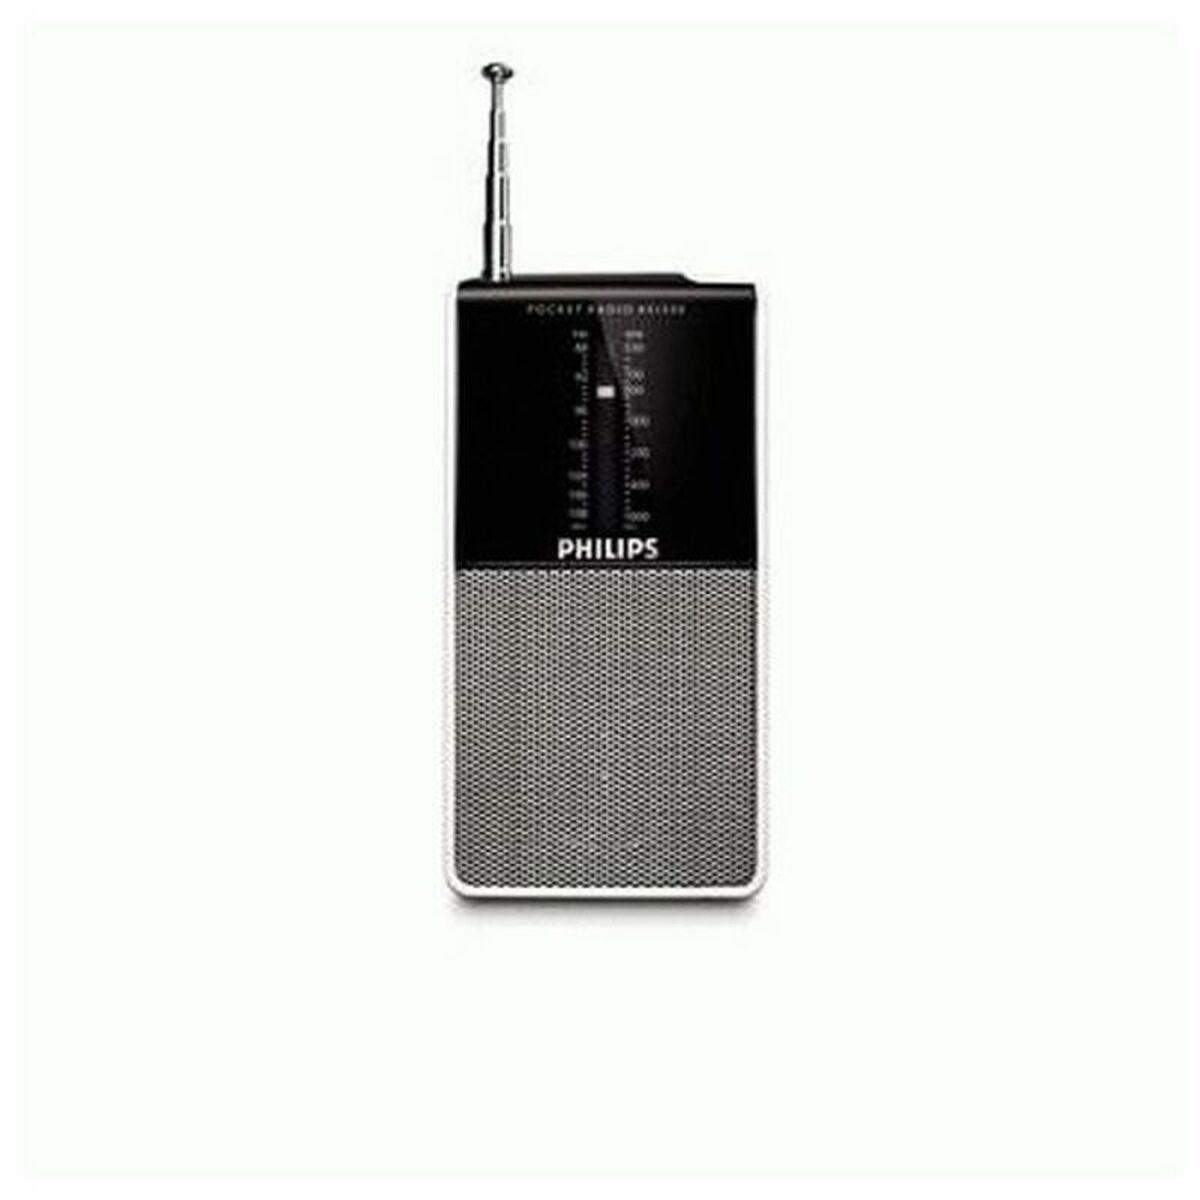 Transitorradio Philips Radio portátil